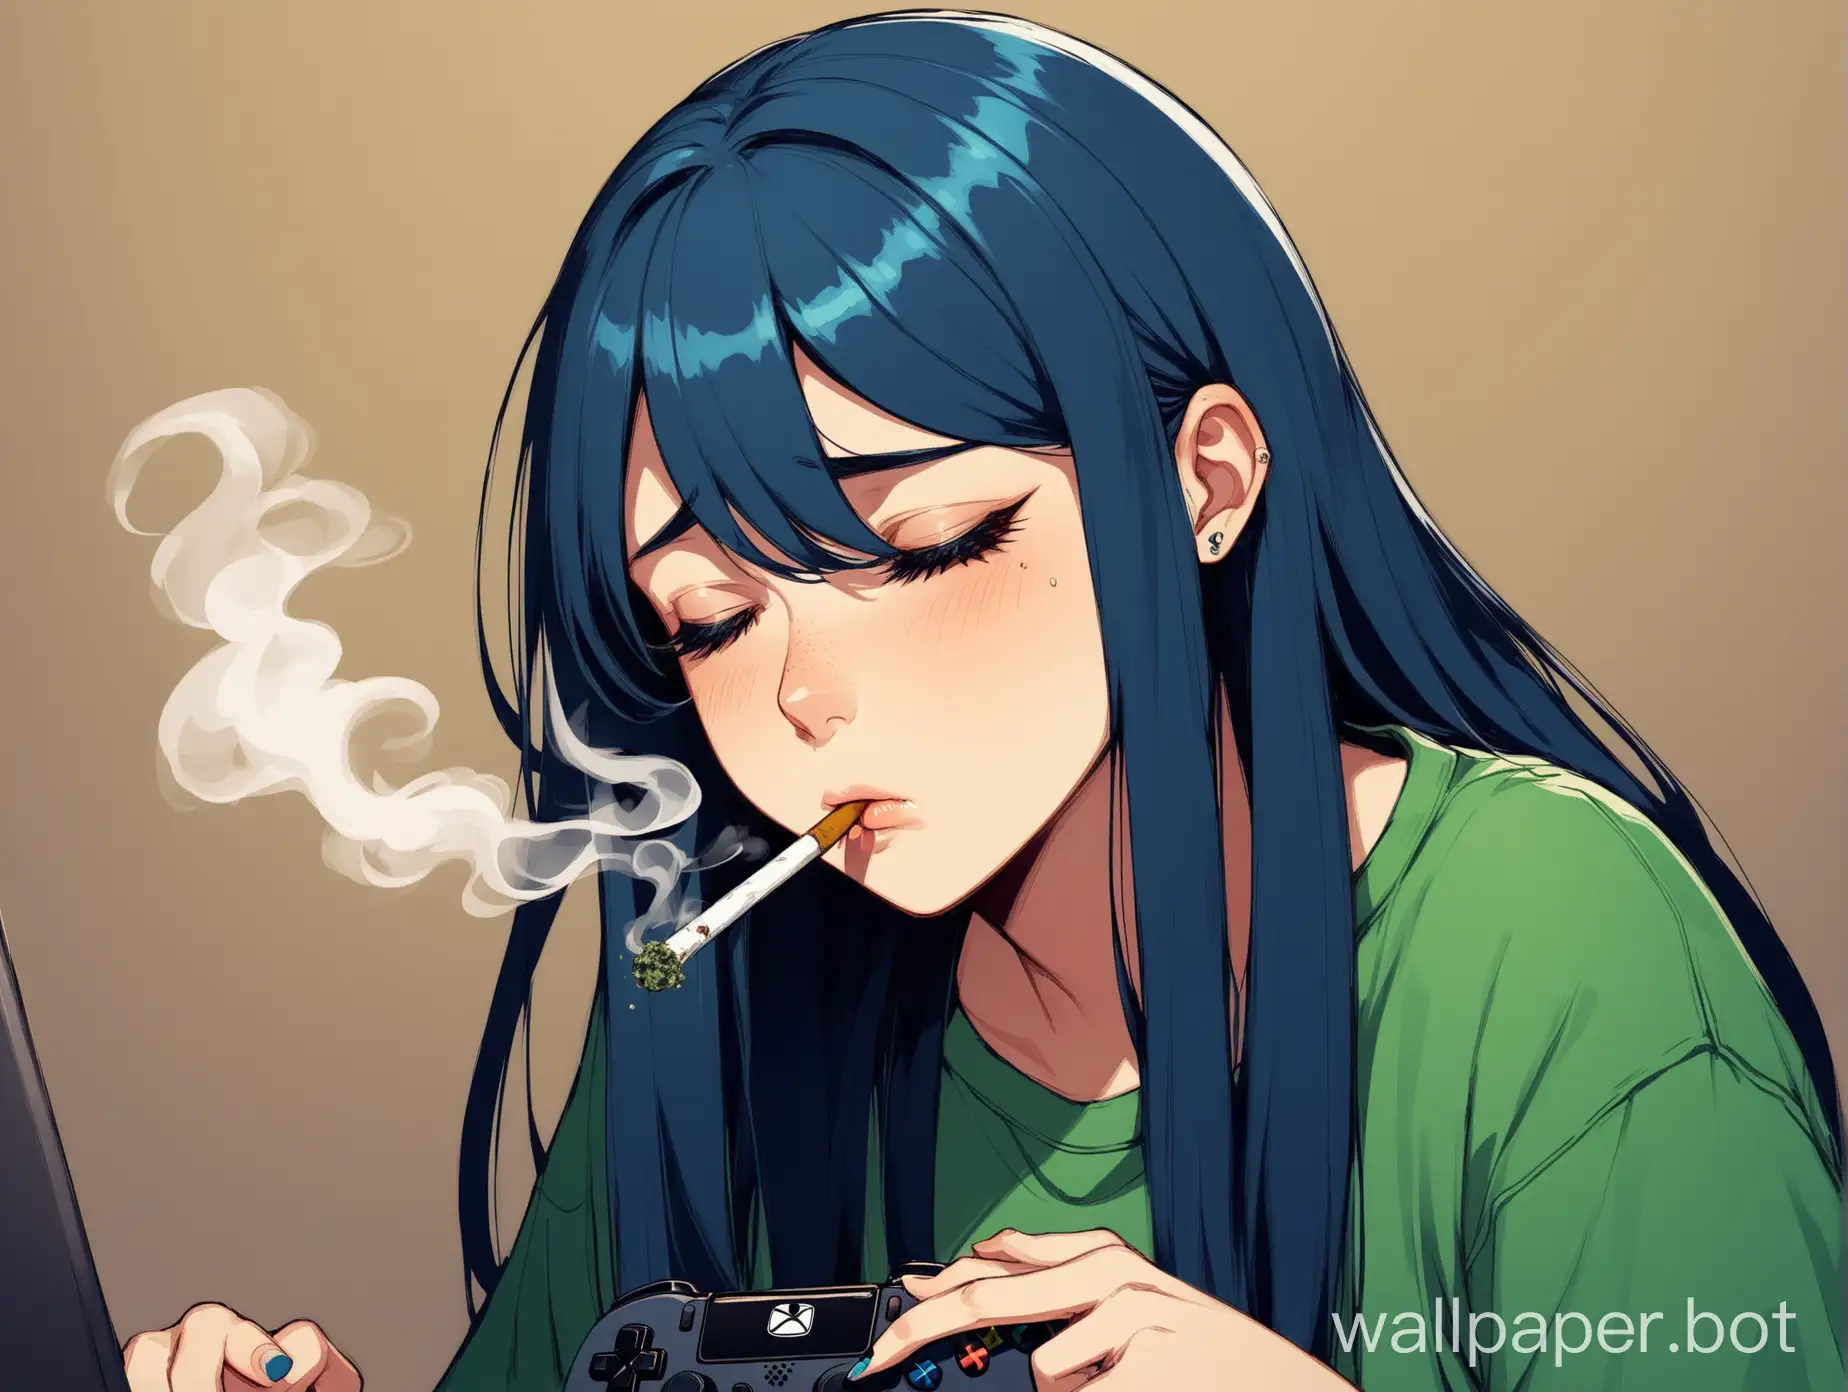 Chill-Stoner-Gamer-Girl-with-Long-Dark-Blue-Hair-Smoking-Weed